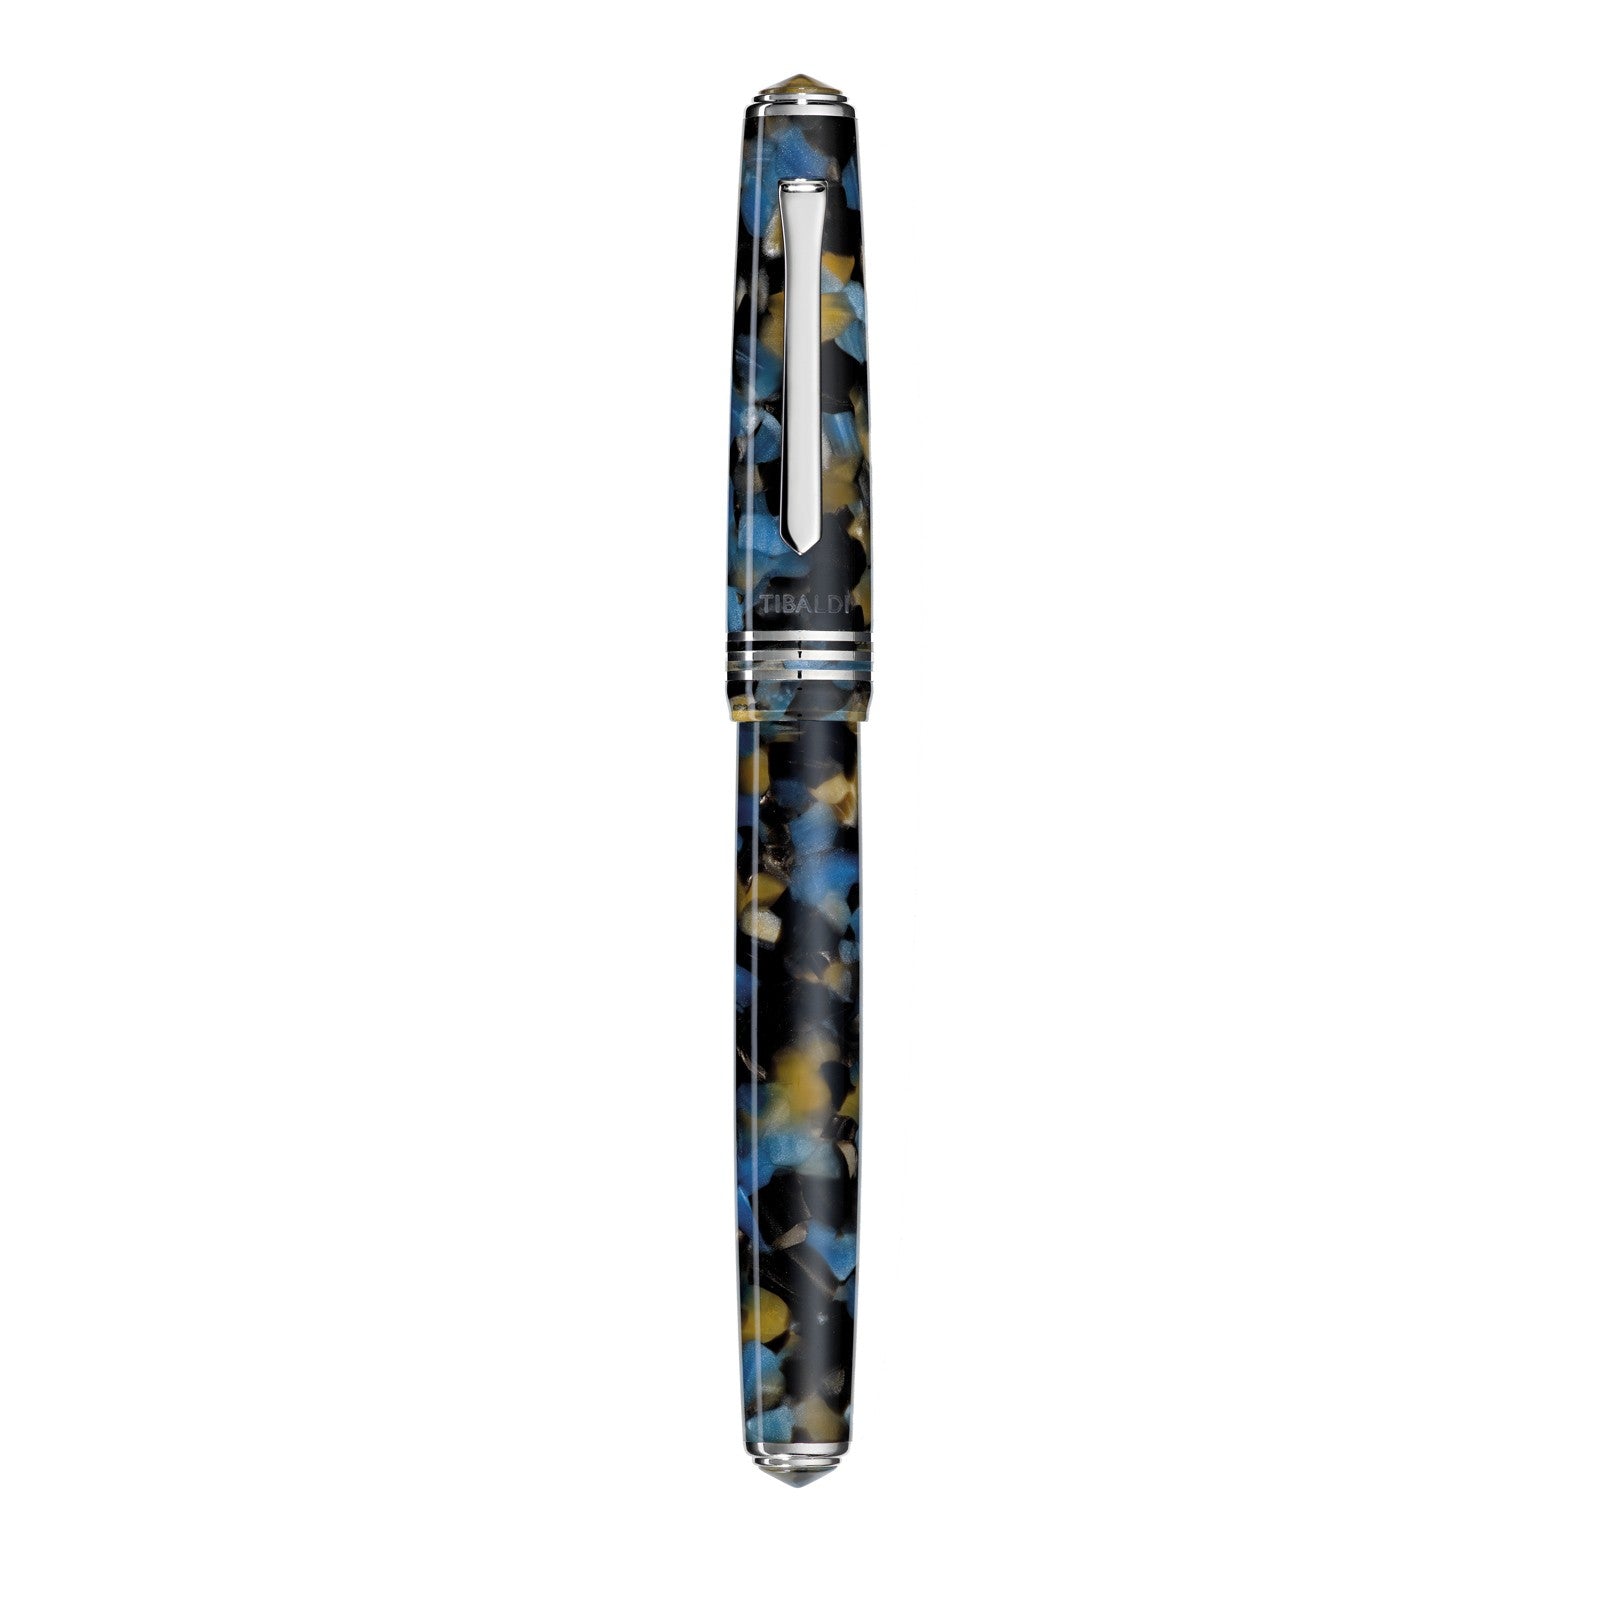 Tibaldi stilografica N60 in resina blu Samarkand punta larga N60-681_FP-B - Gioielleria Capodagli